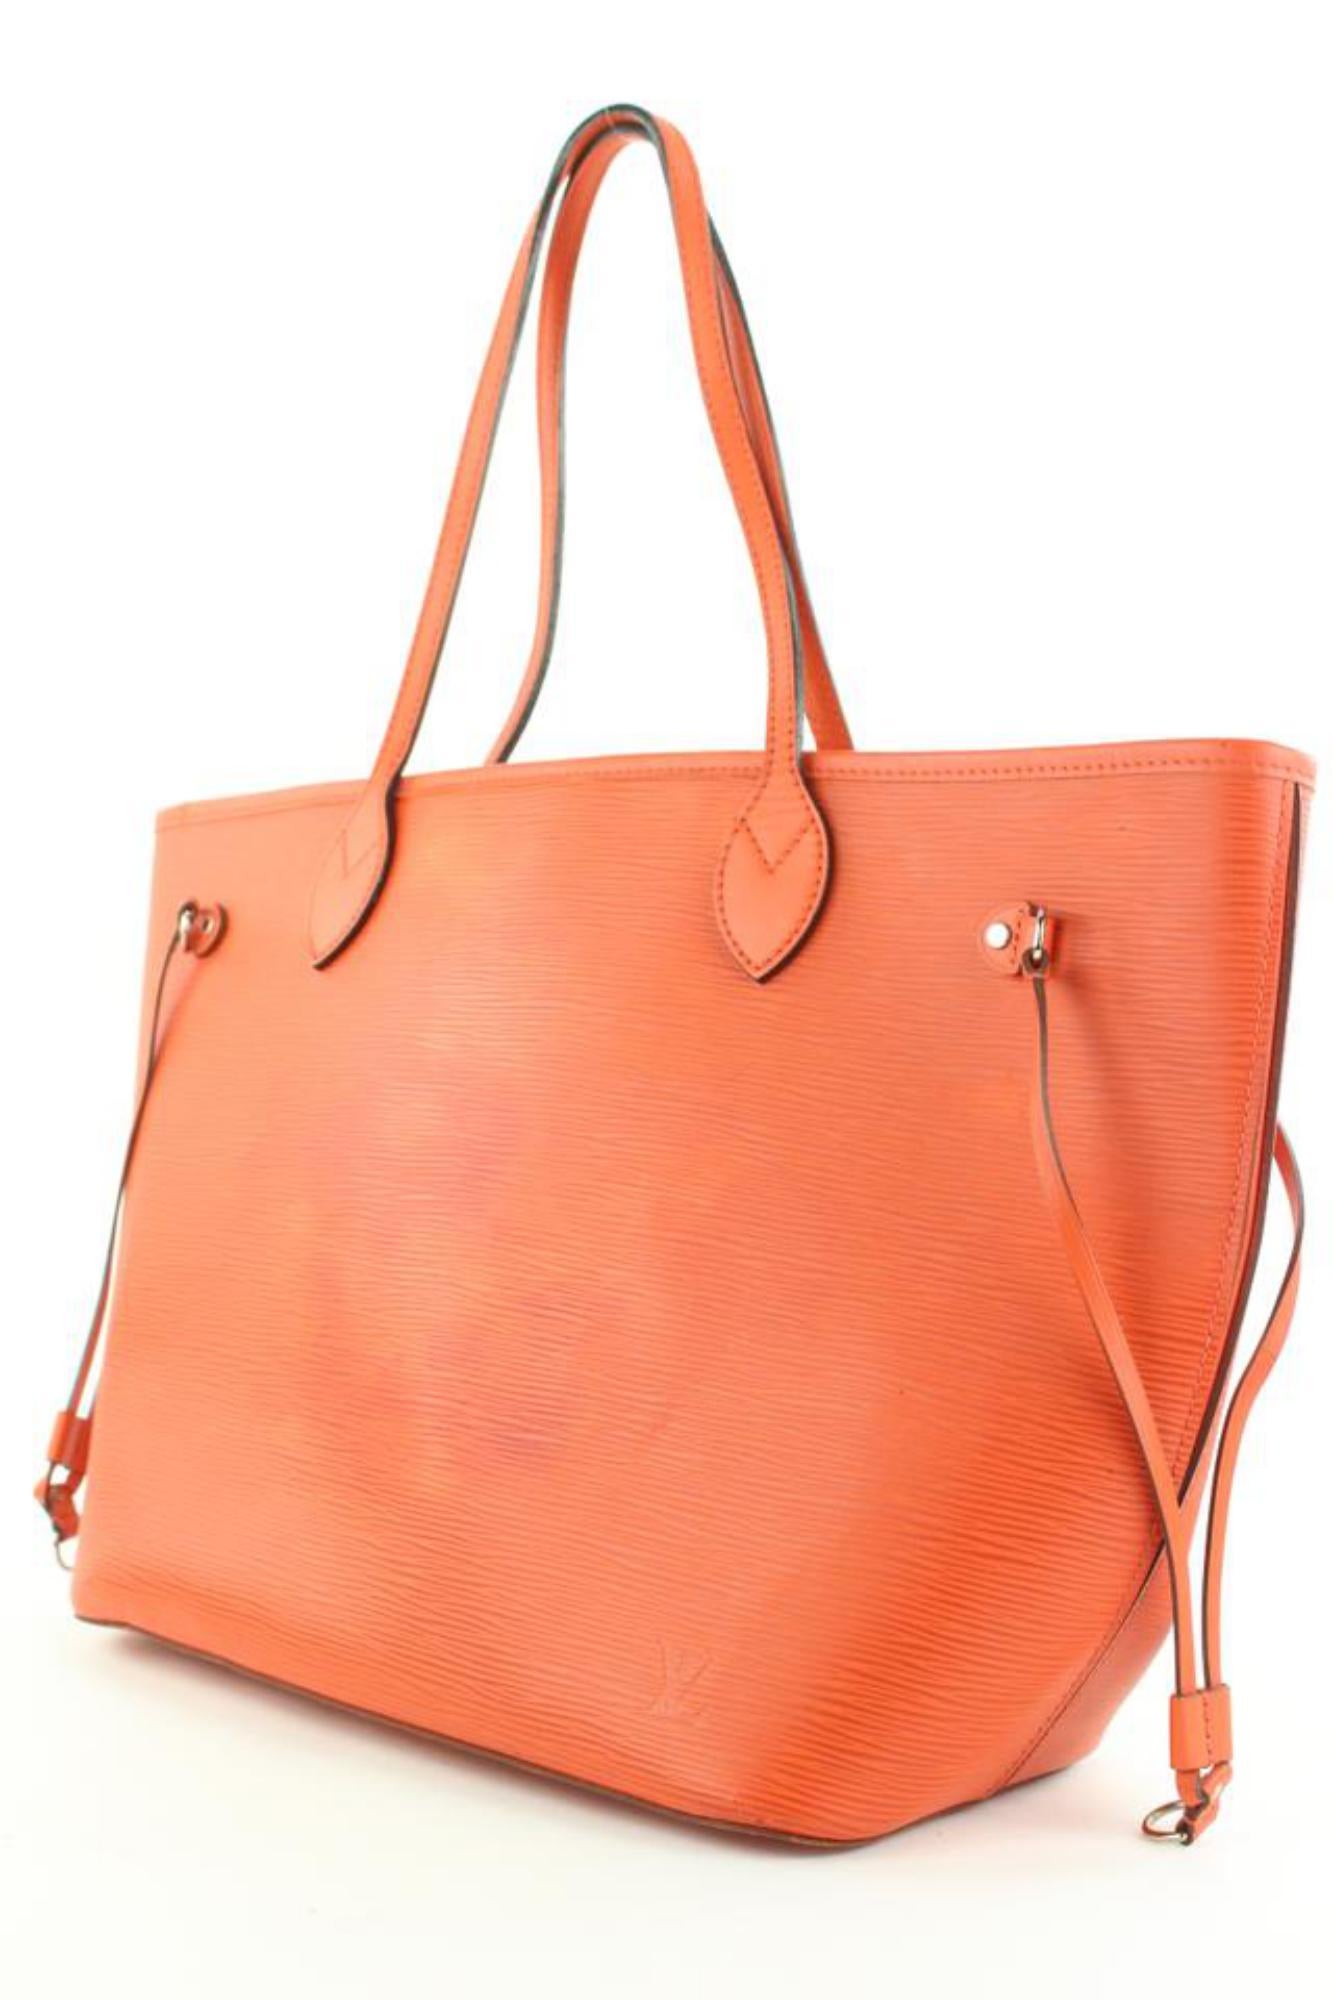 Louis Vuitton Mandarin Orange Epi Leather Neverfull MM Tote Bag 855344 For Sale 5